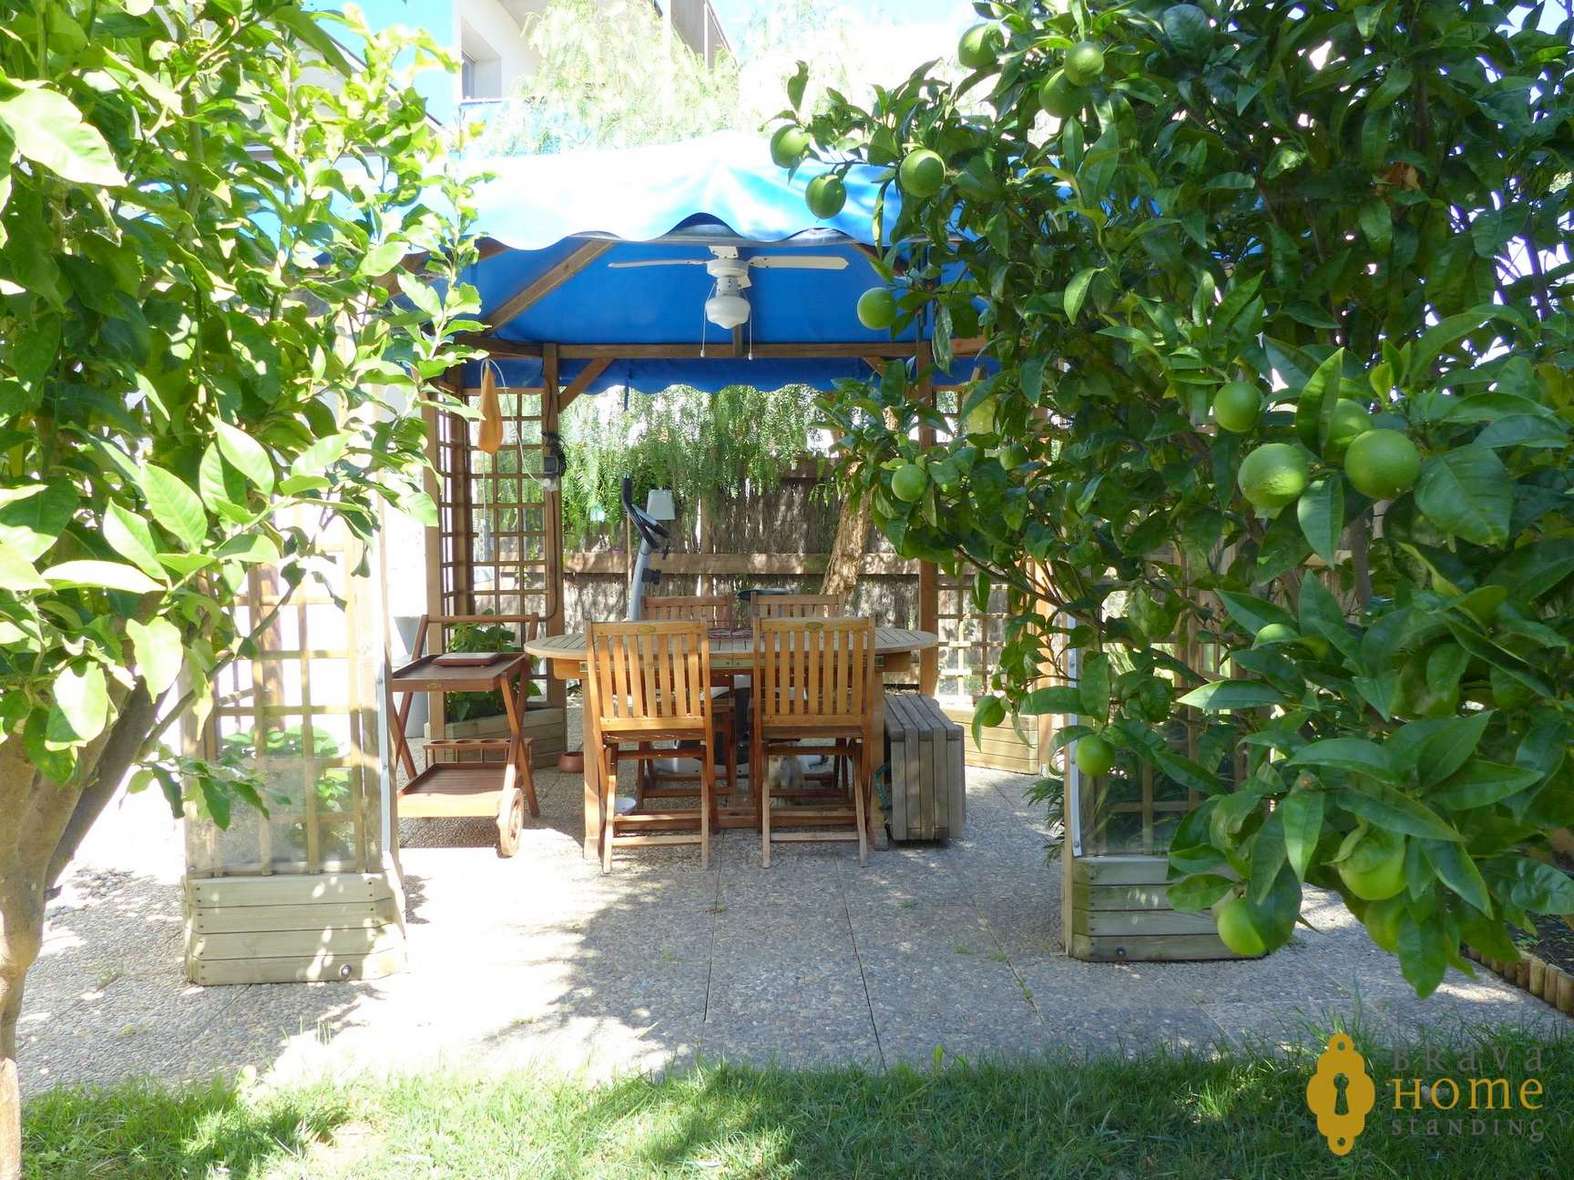 Superb apartment with private garden for sale in Rosas - Santa Margarita